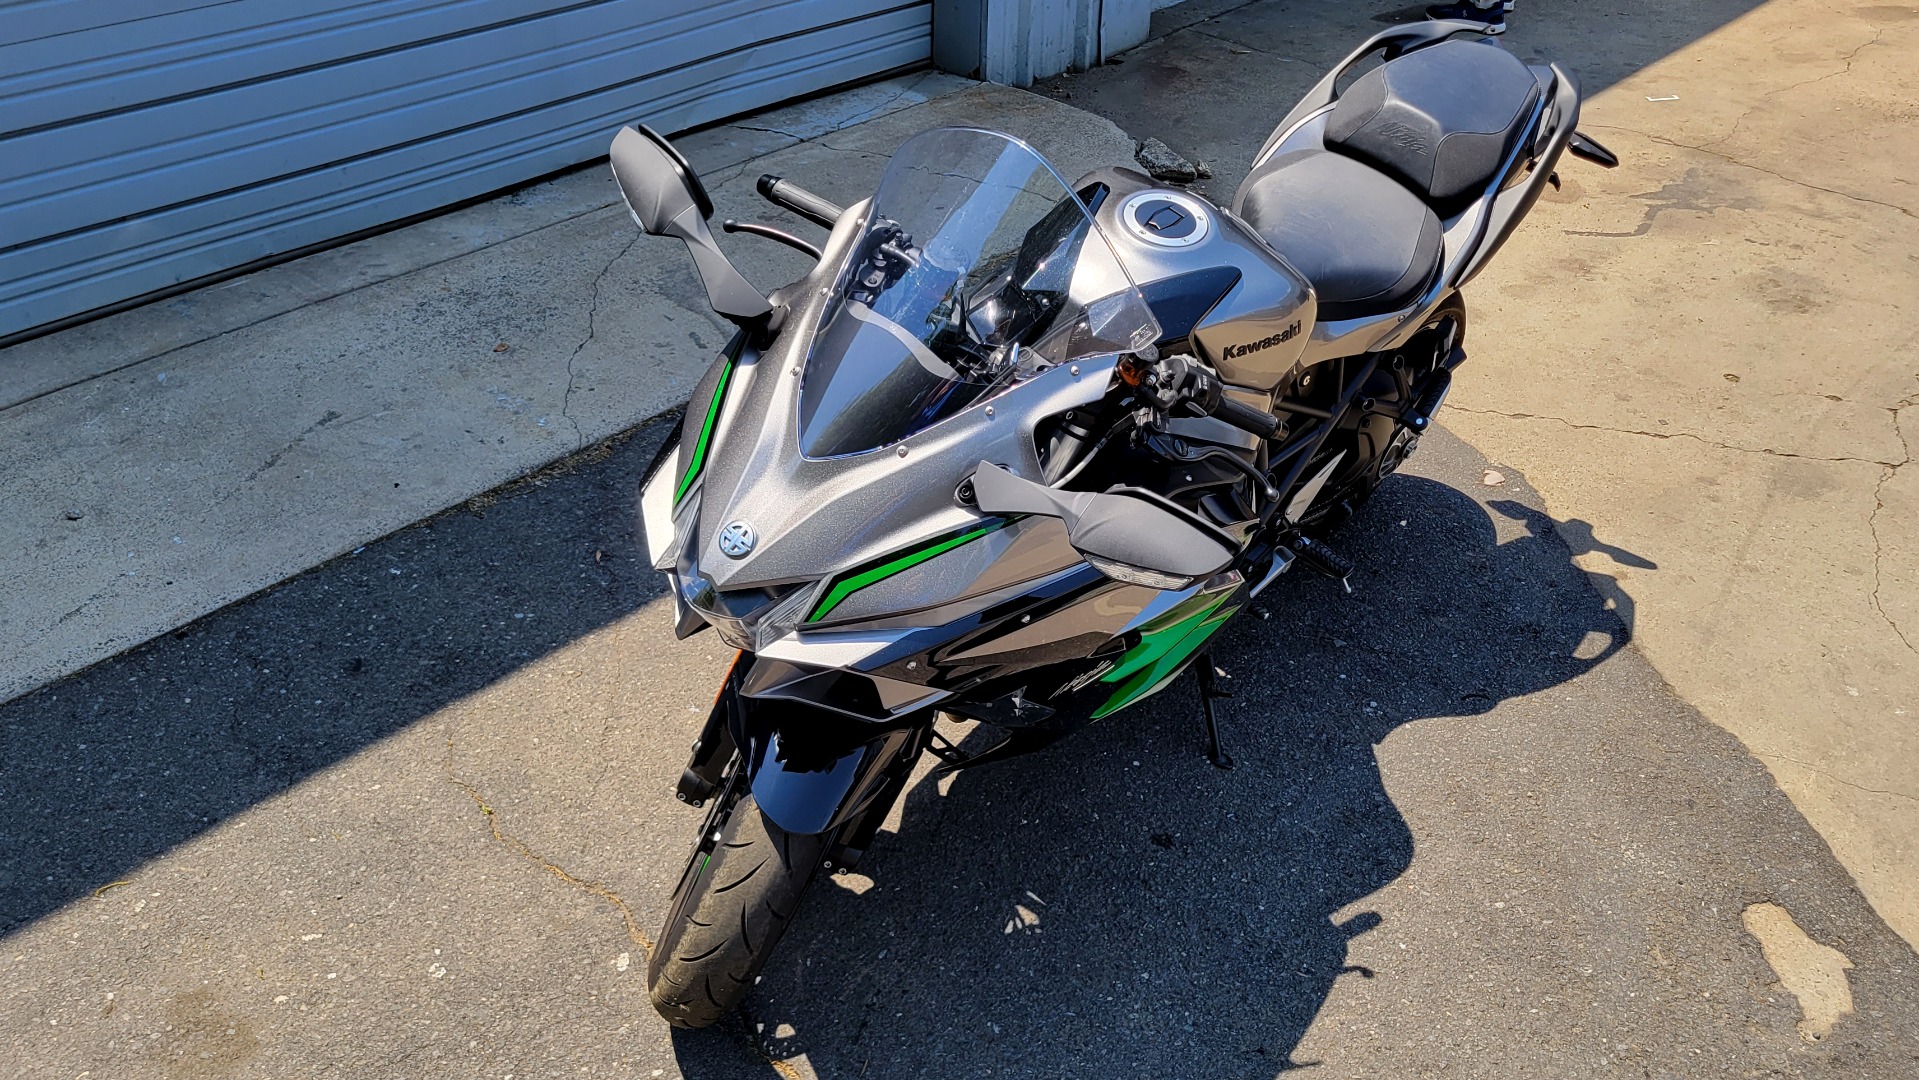 Used 2019 Kawasaki NINJA H2 SX / 998CC 197HP / SPORT TOURING MOTORCYCLE for sale $23,000 at Formula Imports in Charlotte NC 28227 4